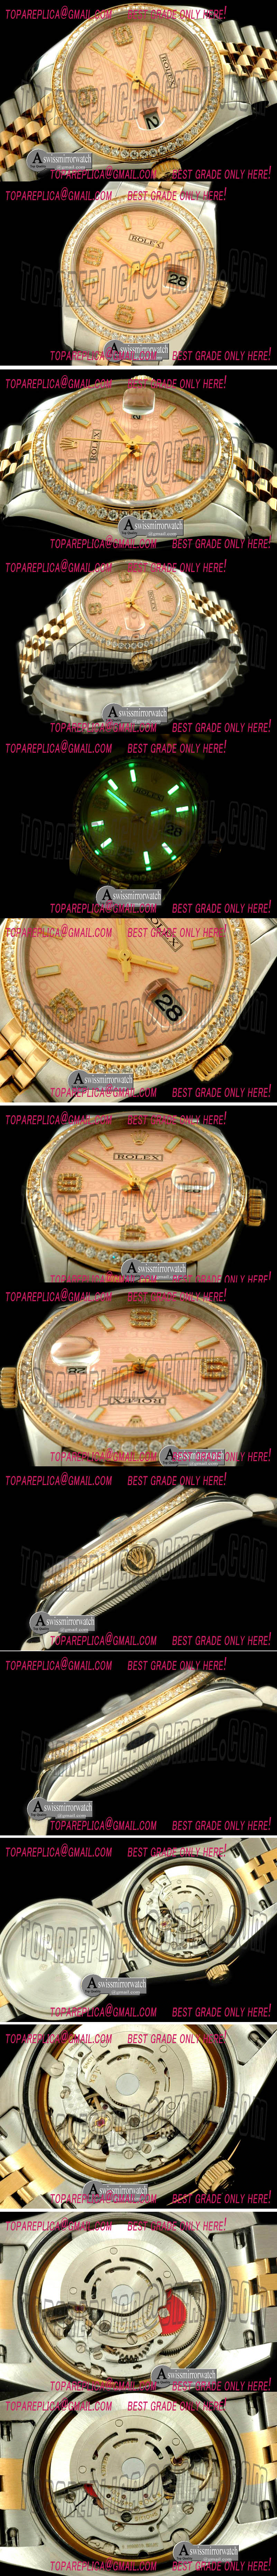 Replica Rolex DateJust Watches